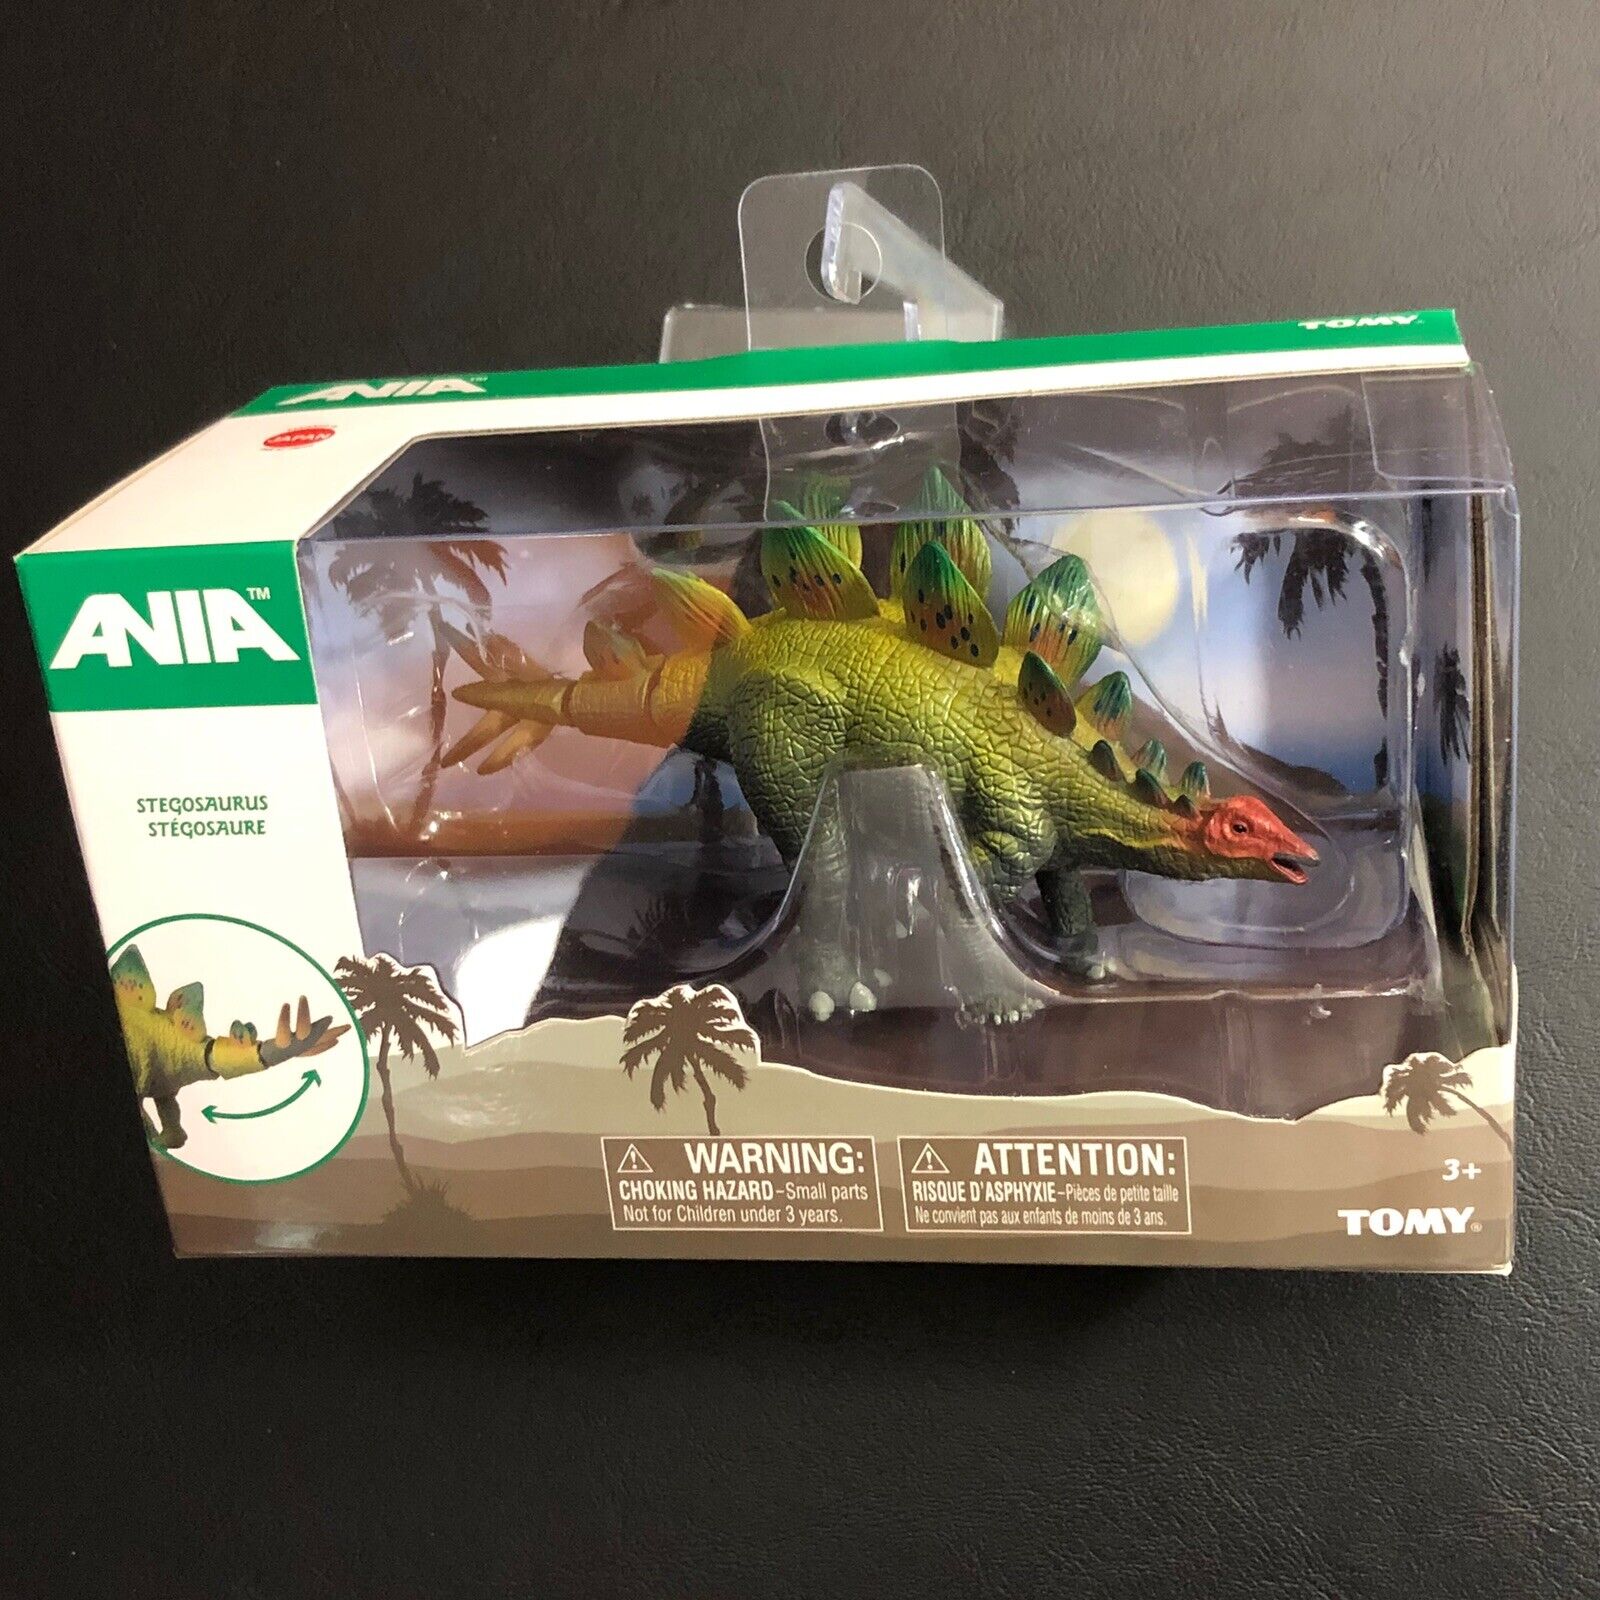 NEW Tony Japan Ania | STEGOSAURUS | Articulated Dinosaur Collection Toy Figure